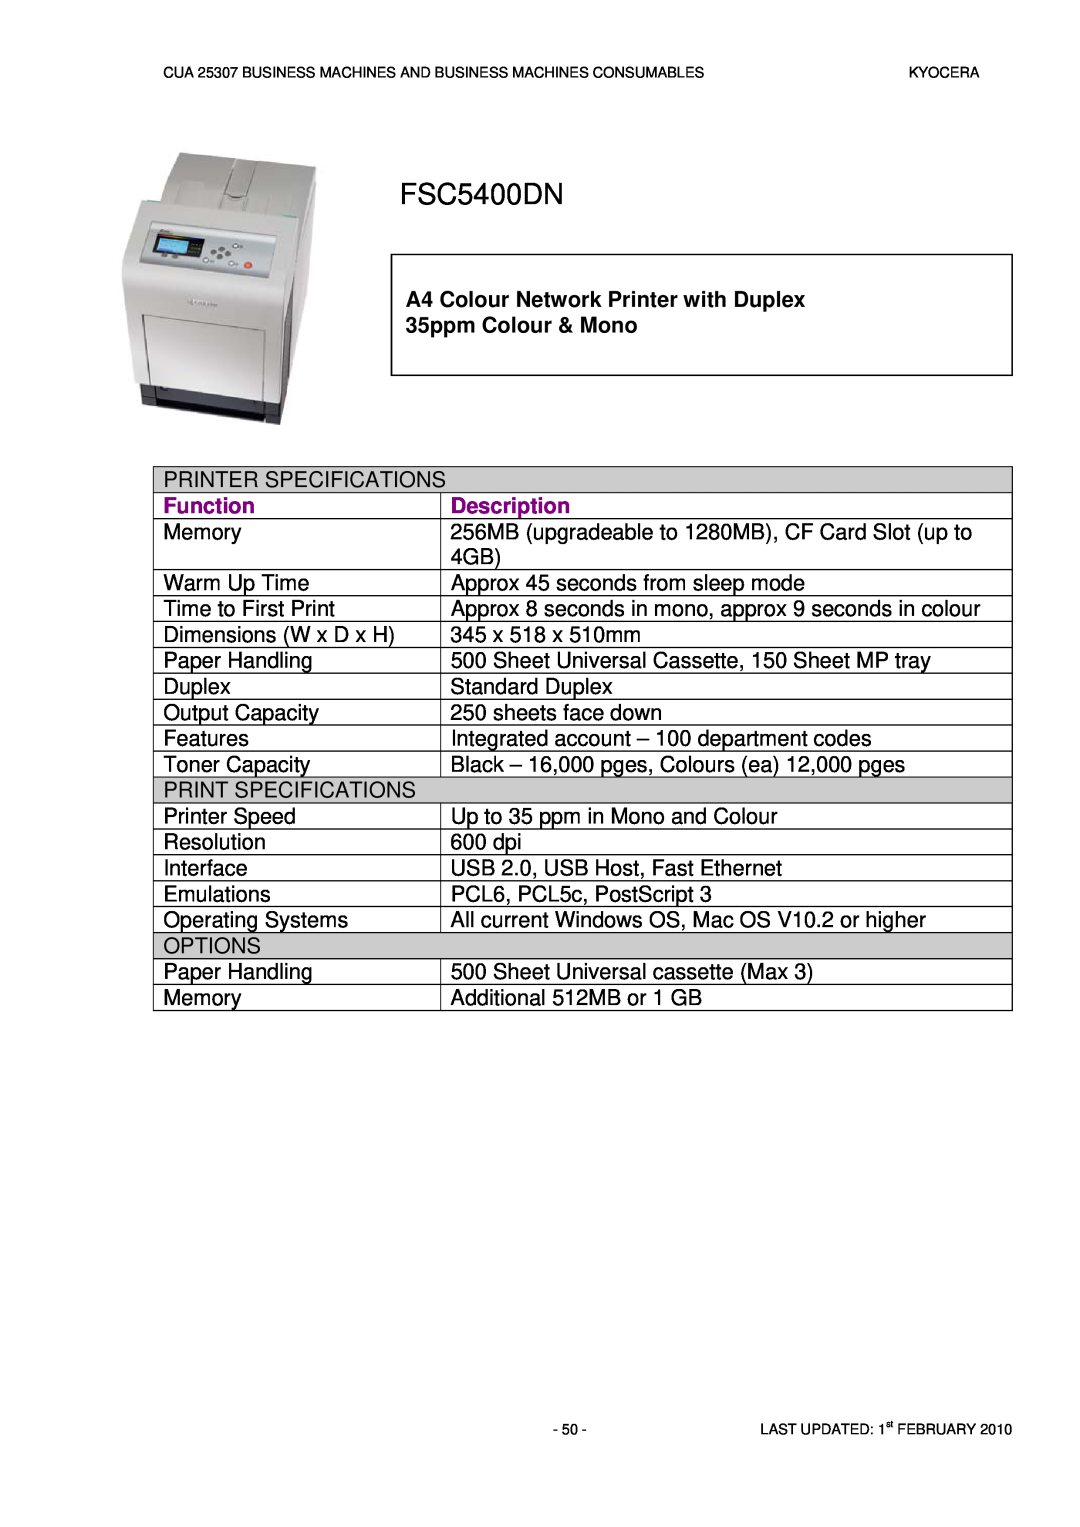 Kyocera CUA 25307 manual FSC5400DN, Function, Description 